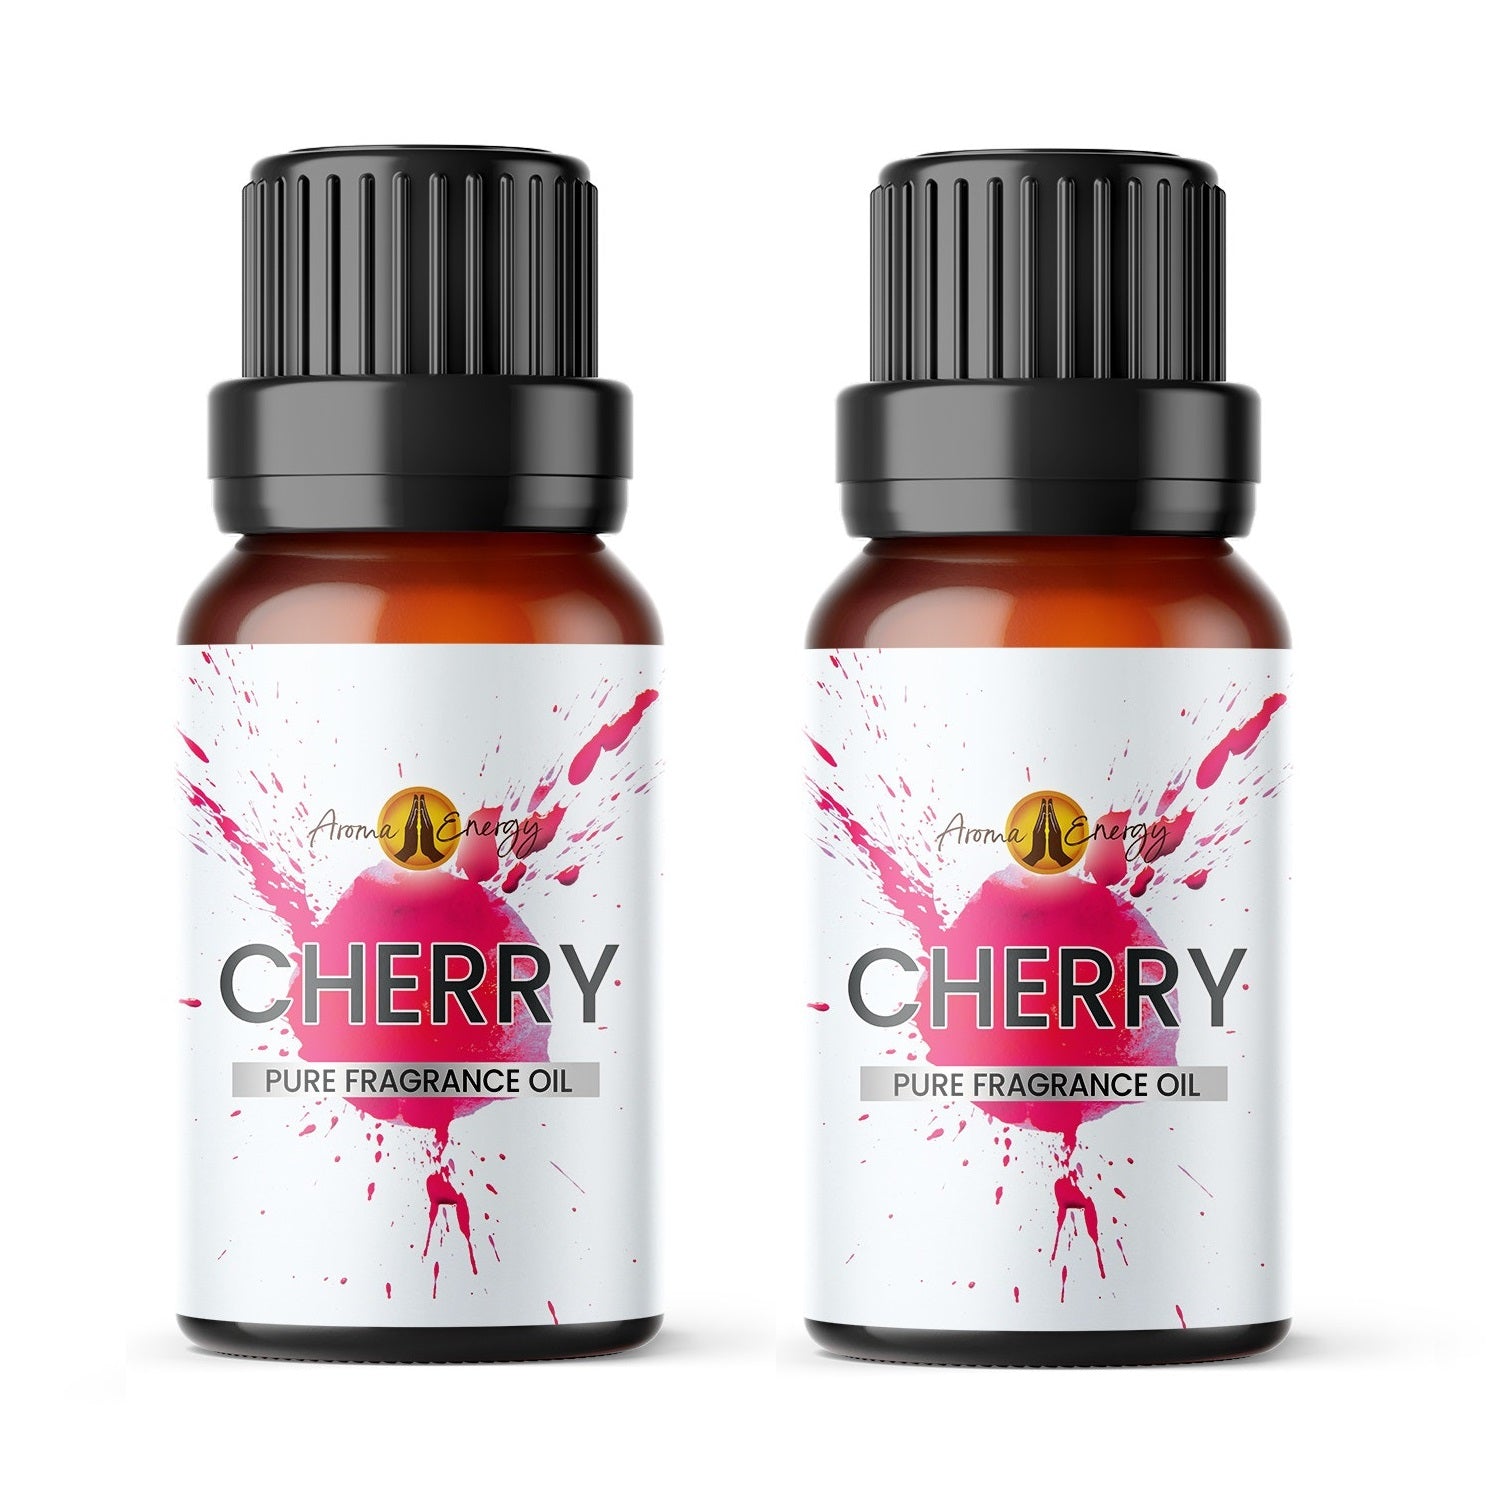 Cherry Fragrance Oil - Aroma Energy